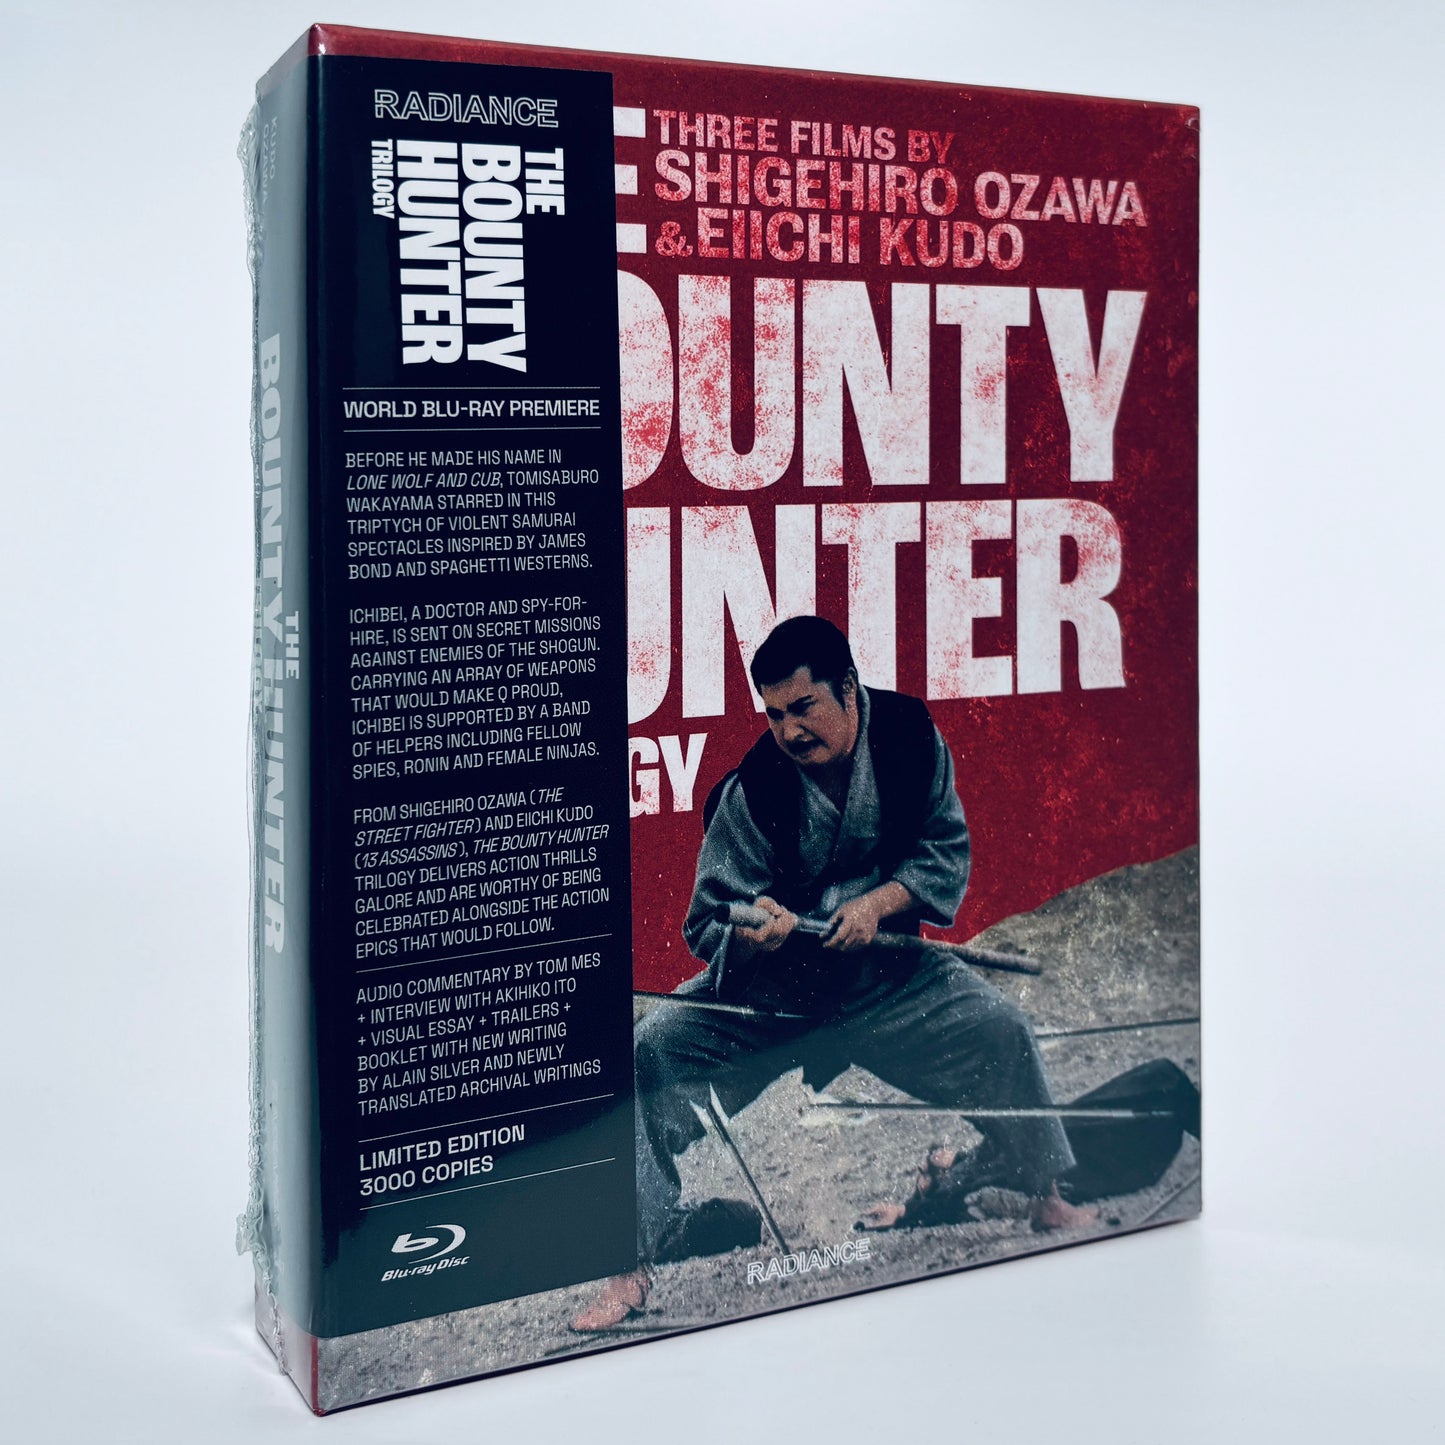 Bounty Hunter Trilogy Blu-ray Radiance Killer’s Mission Fort of Death